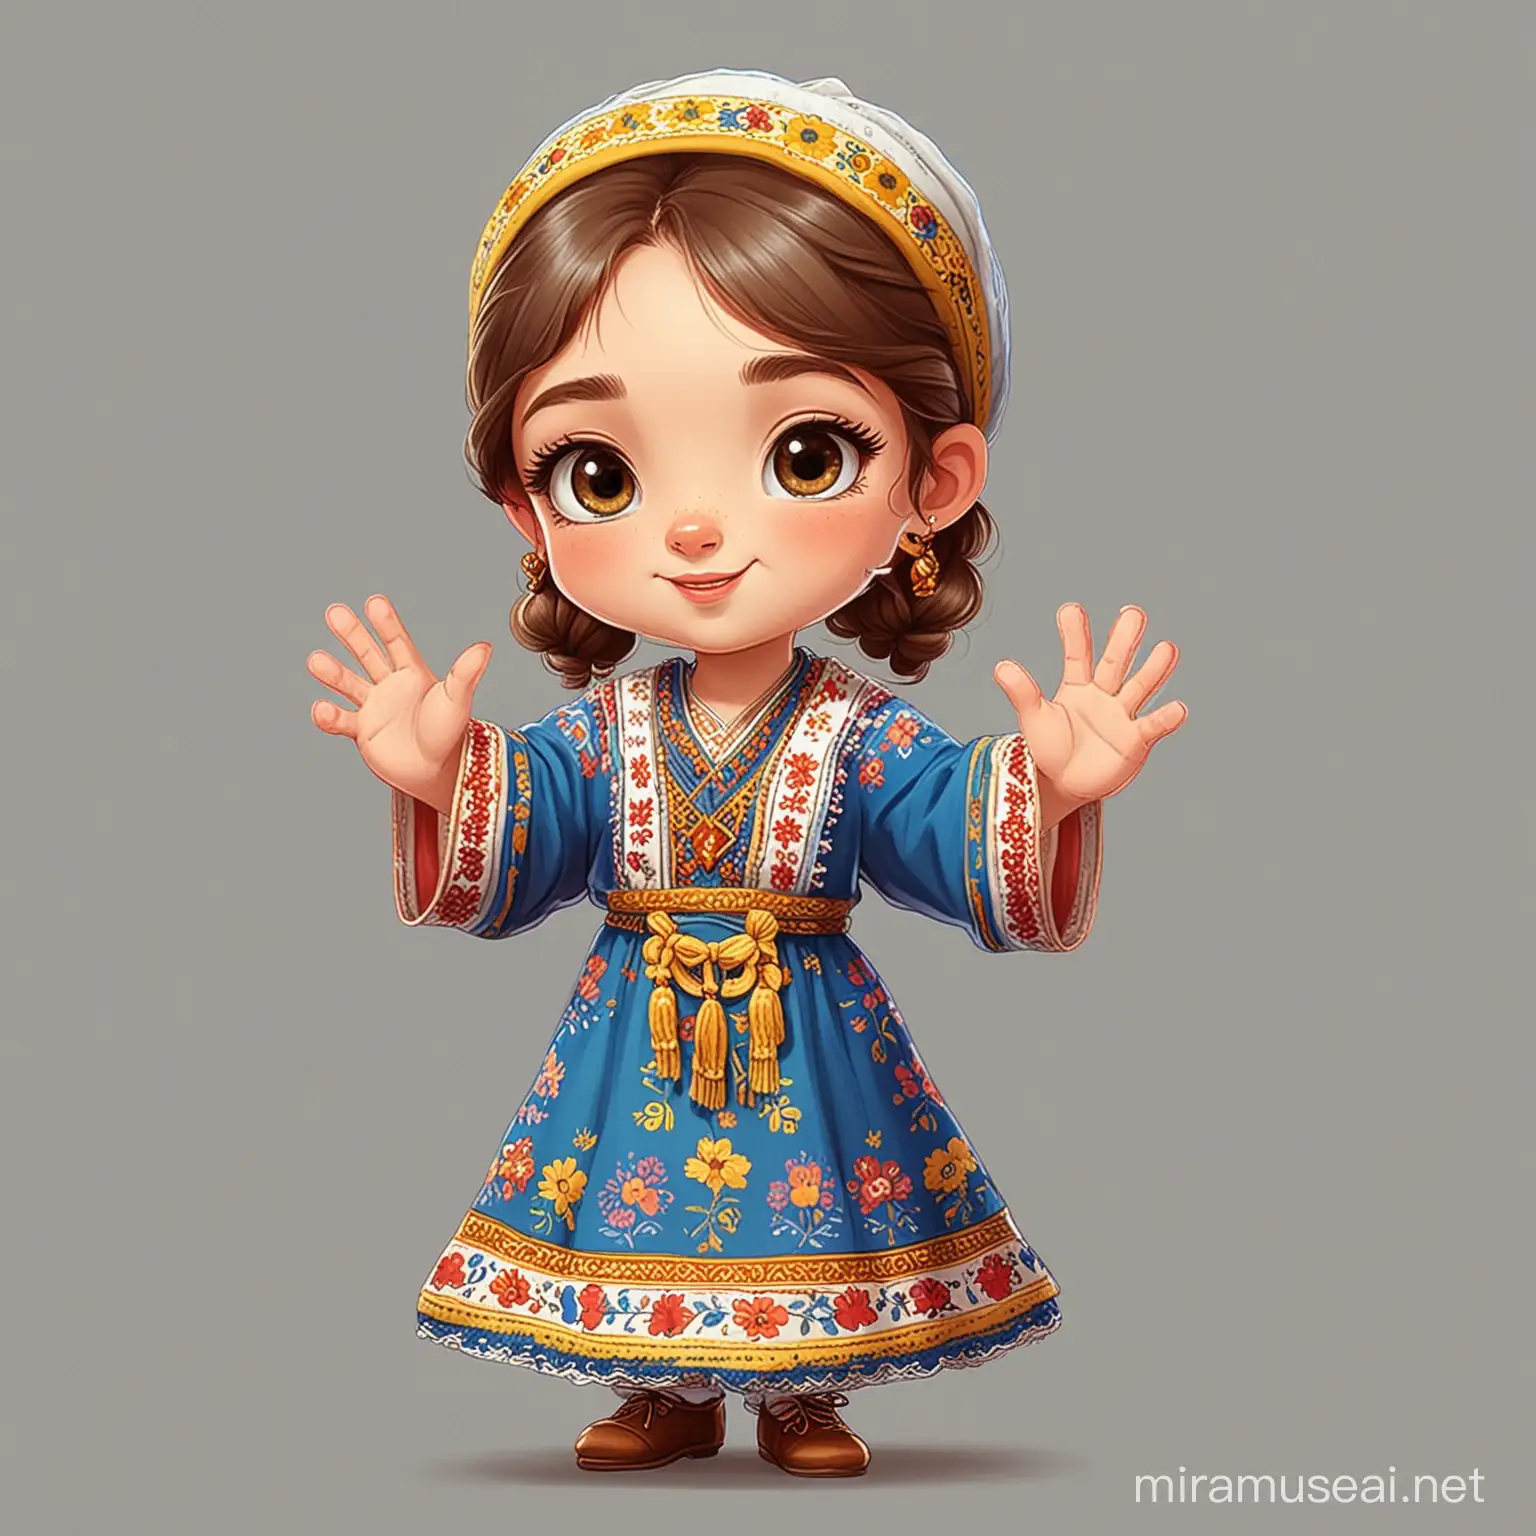 Friendly Ukrainian Girl Waving Hello in Traditional Costume